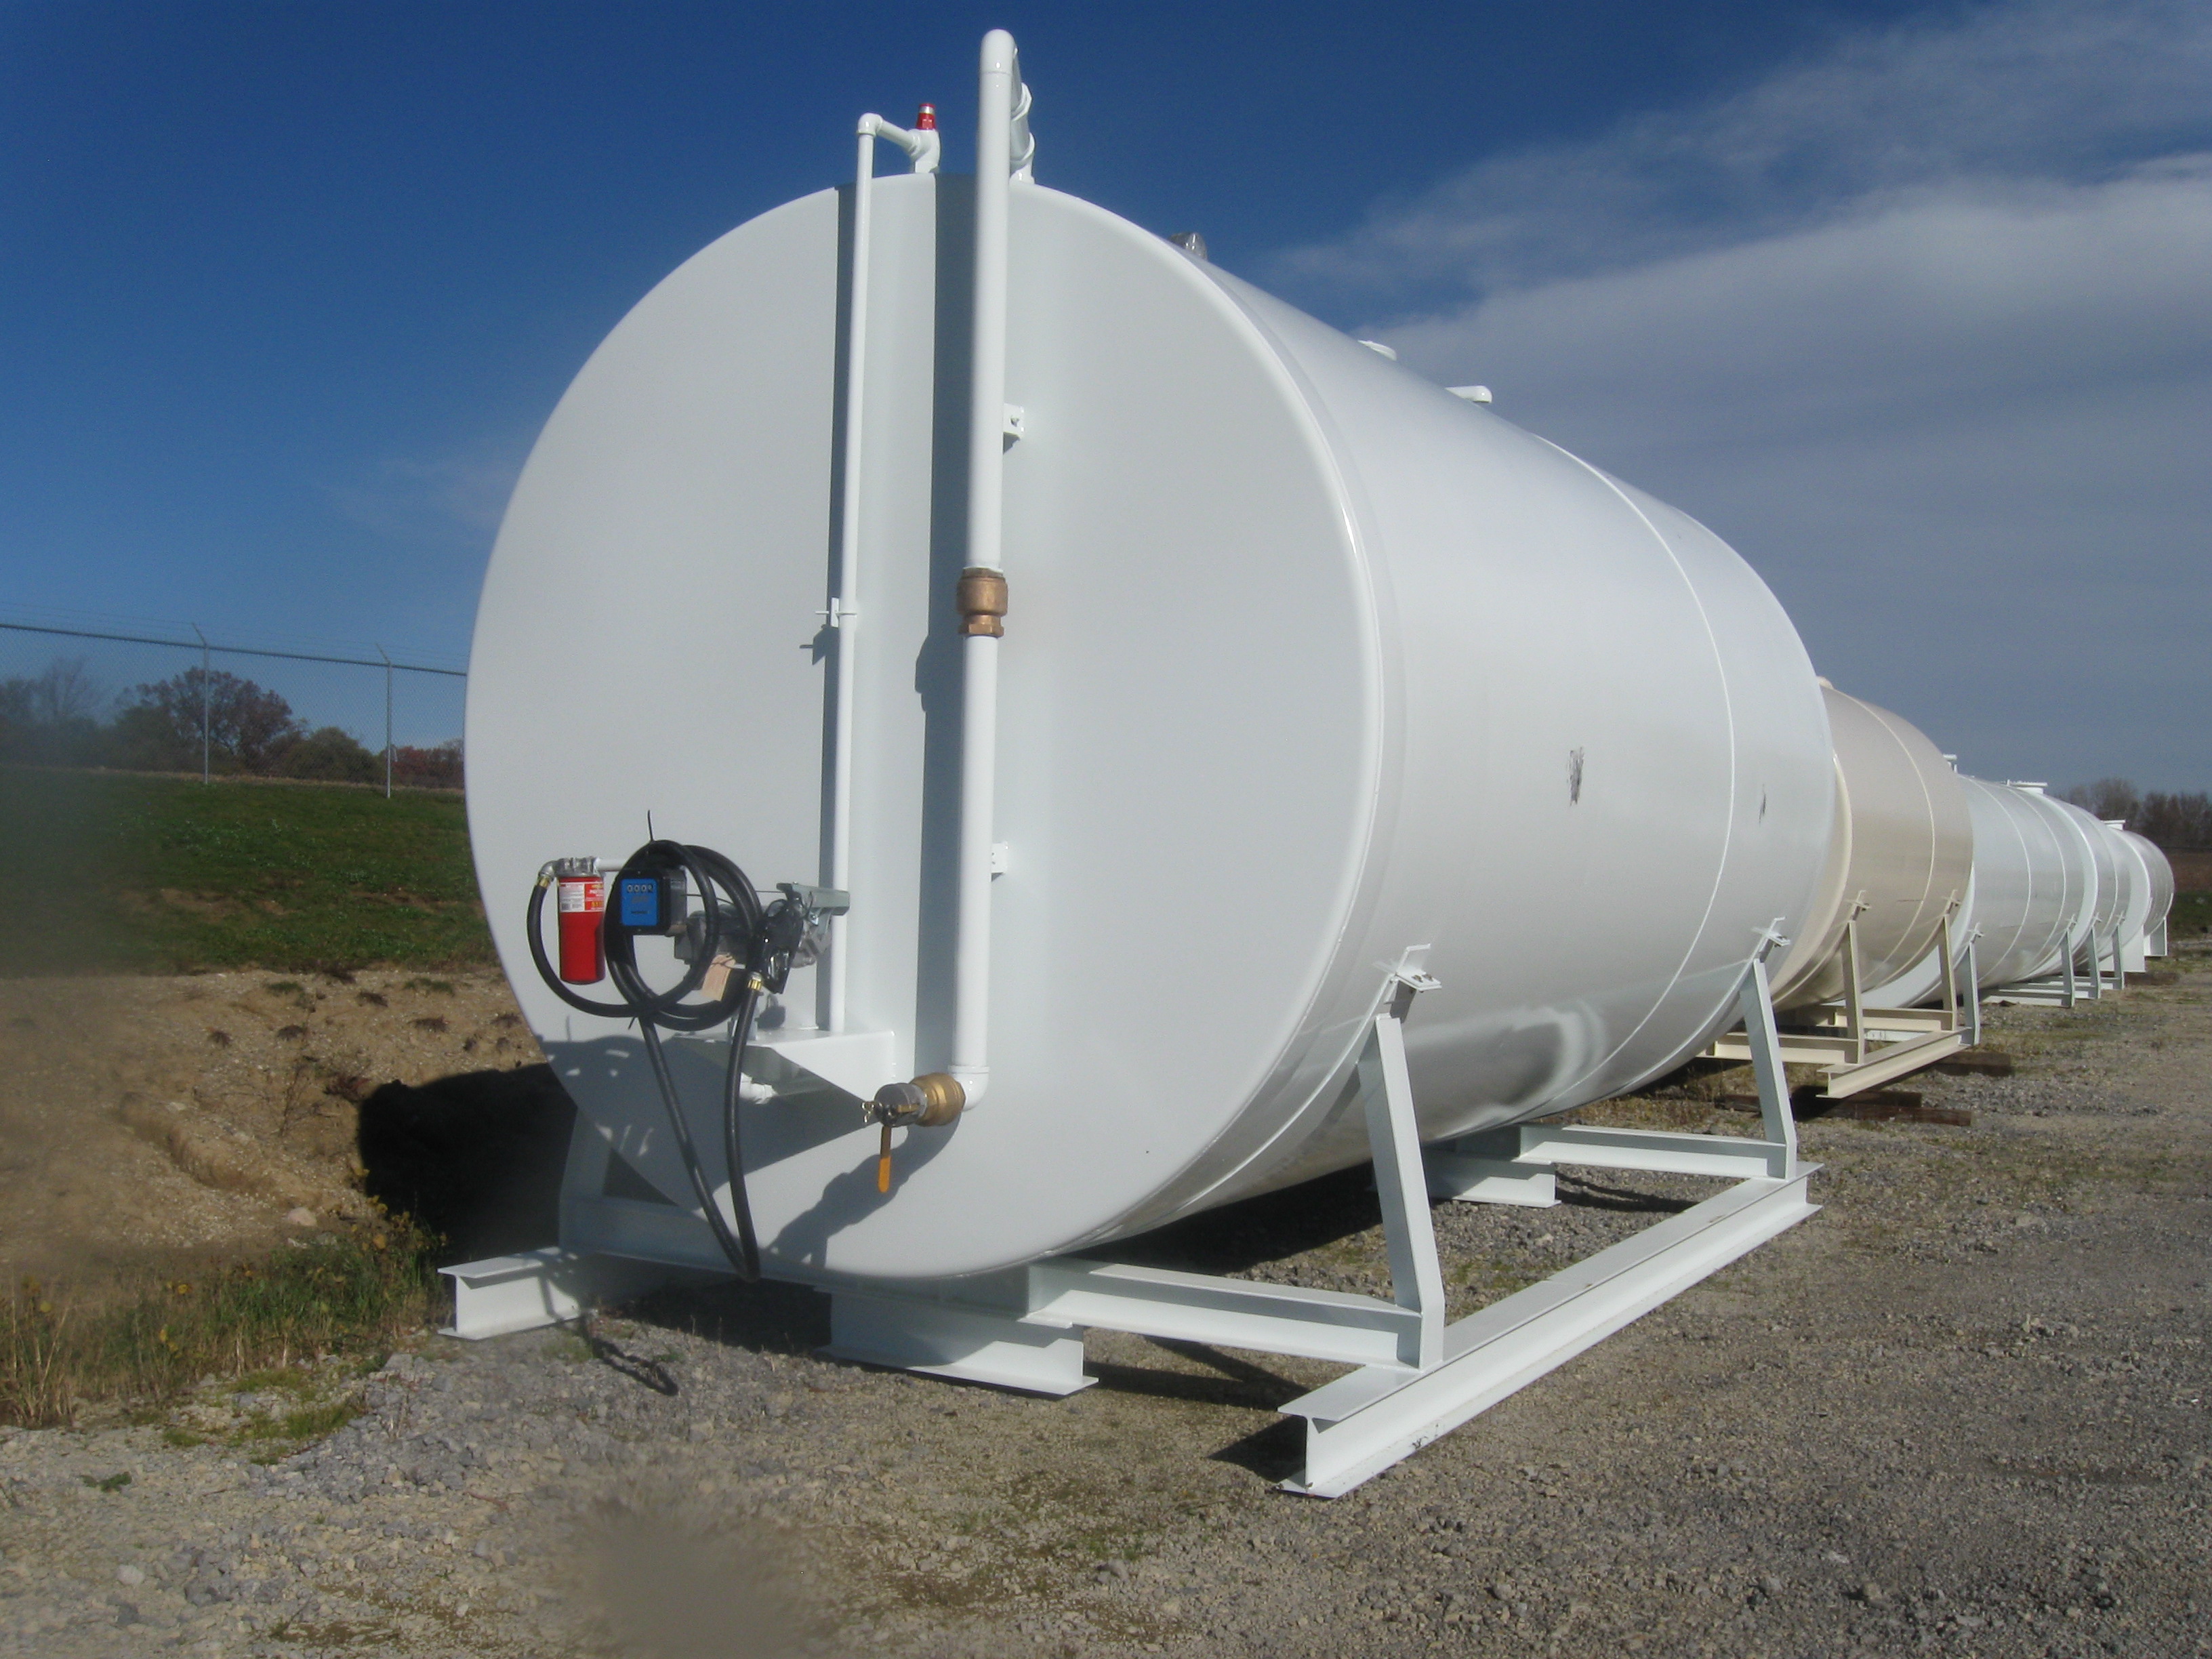 12,000 Gallon Double Wall Fuel Tank For Sale - Houston TX Delta Tank Inc